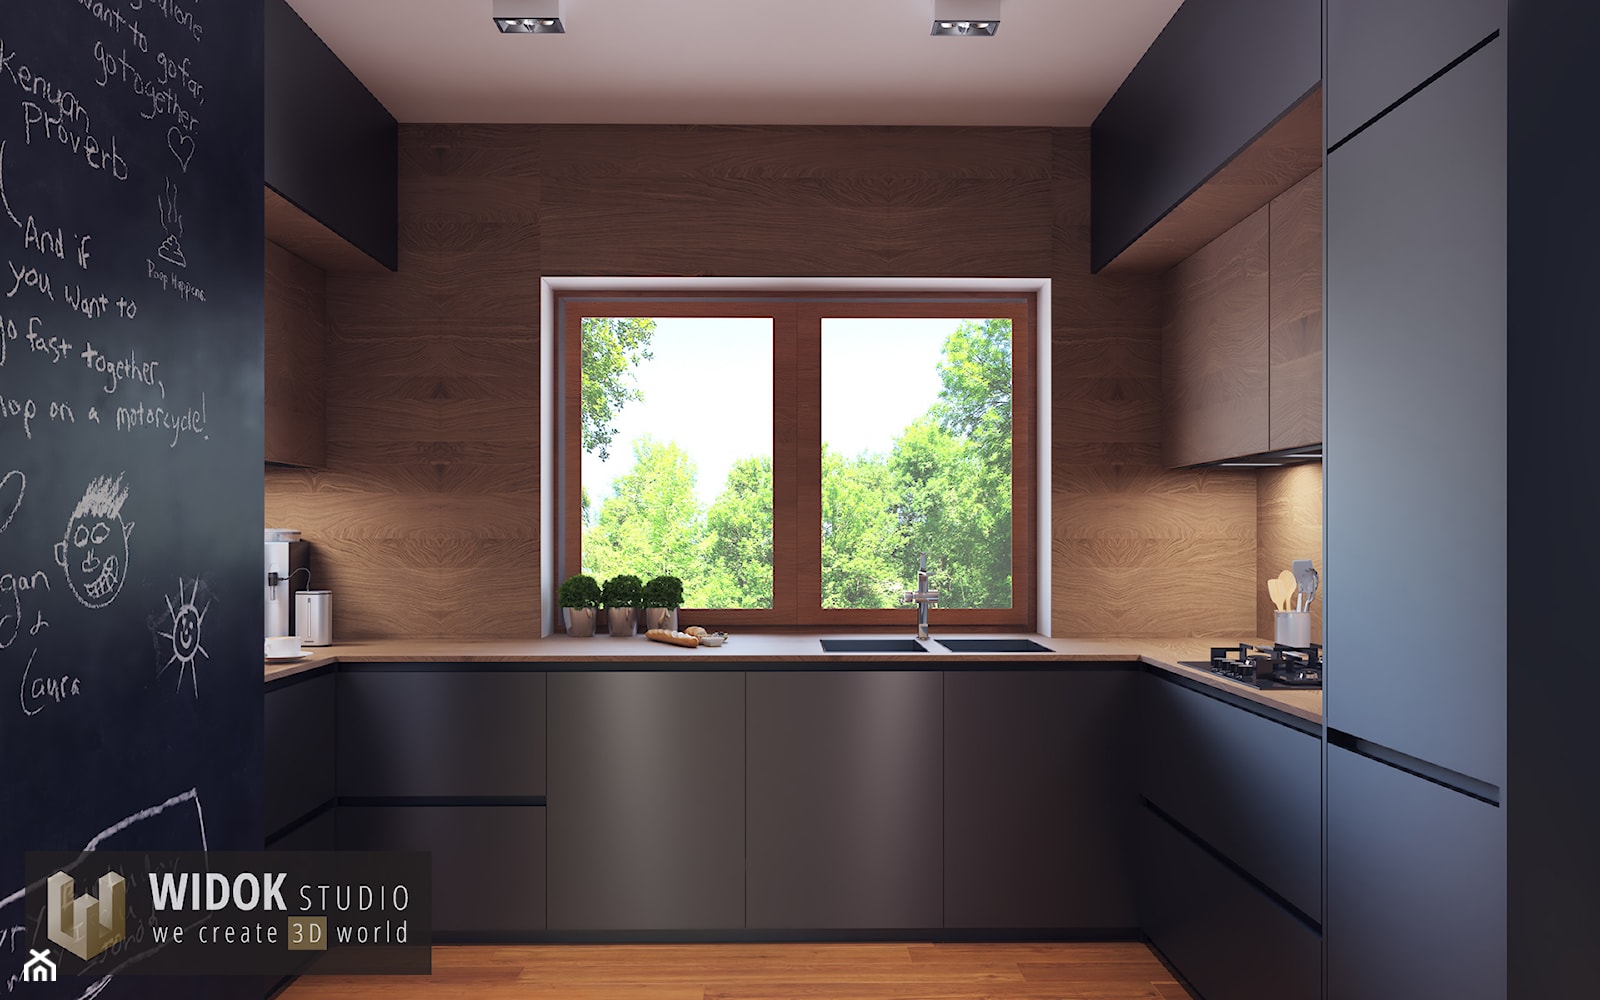 Kuchnia czarna - zdjęcie od WidokStudio we create 3d world - Homebook